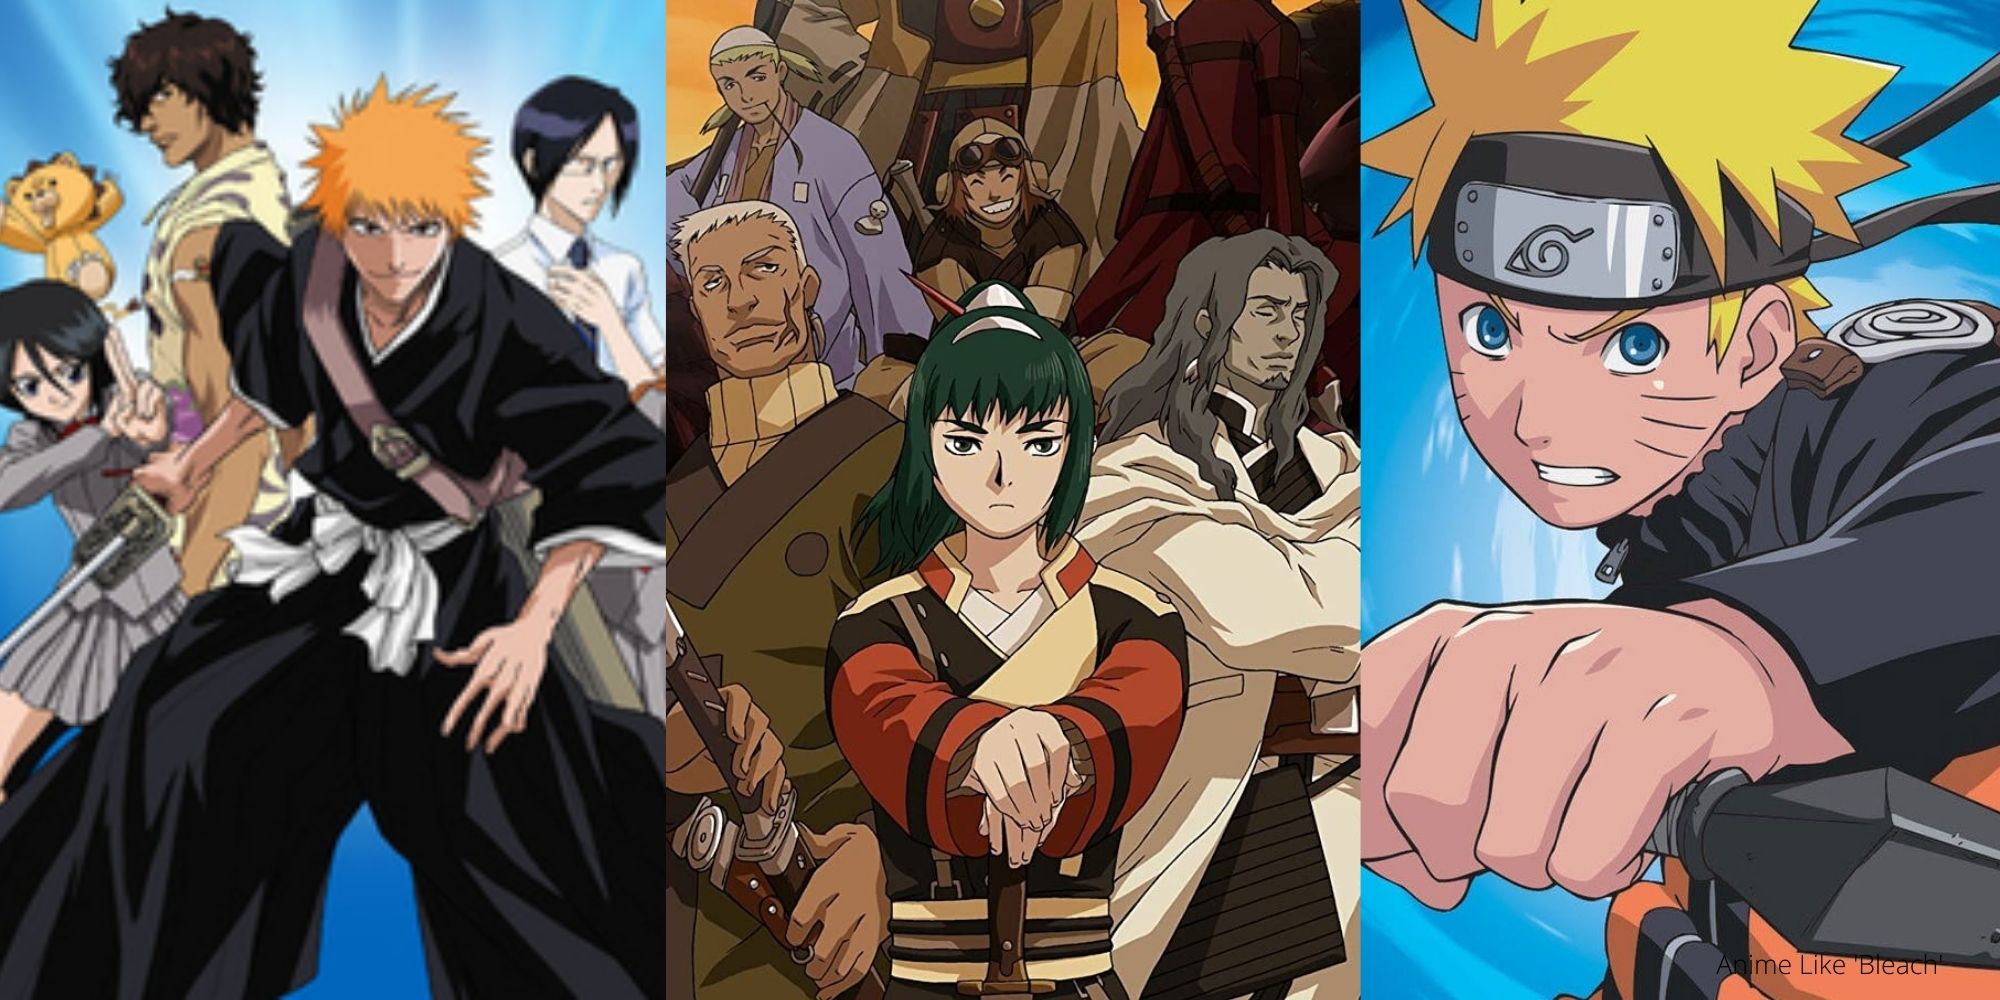 10 Anime Like Bleach To Watch In 2022 - OtakuKart